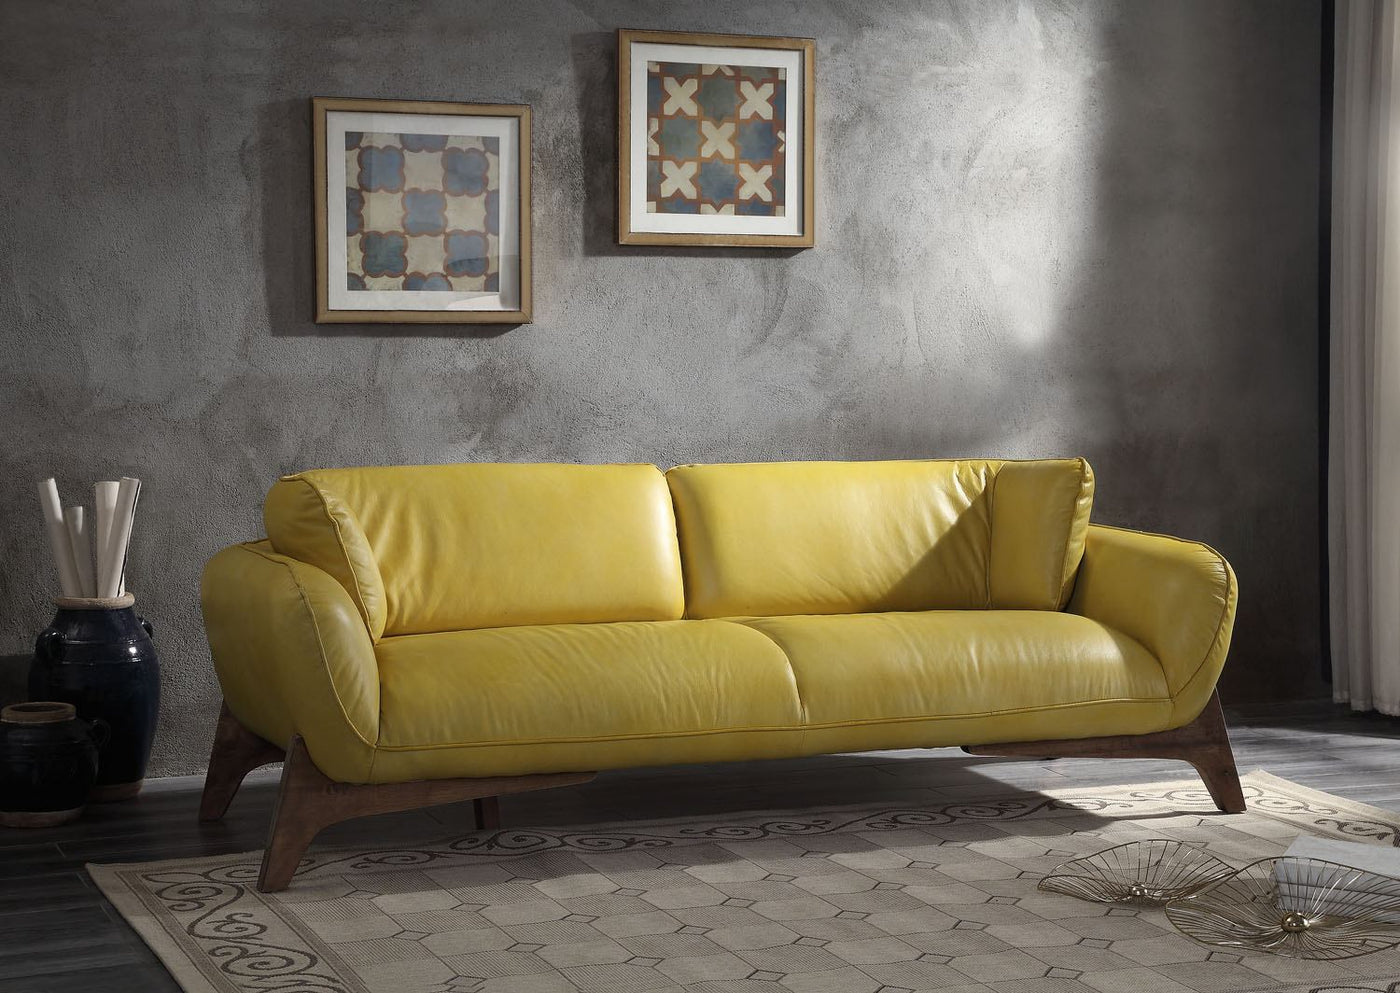 Barbon Leather Sofa - Mustard Yellow